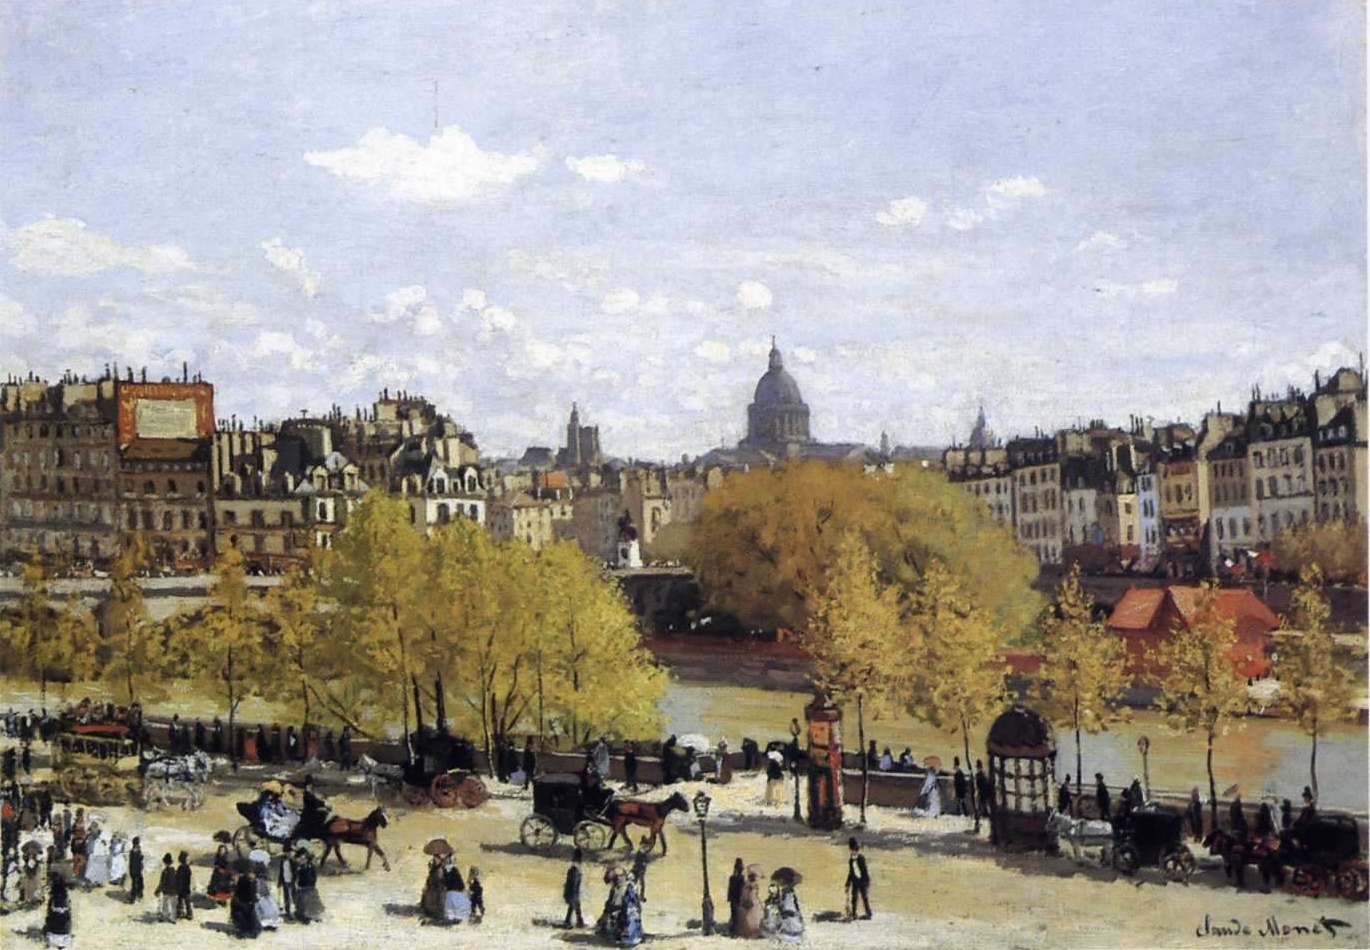 Claude+Monet-1840-1926 (598).jpg